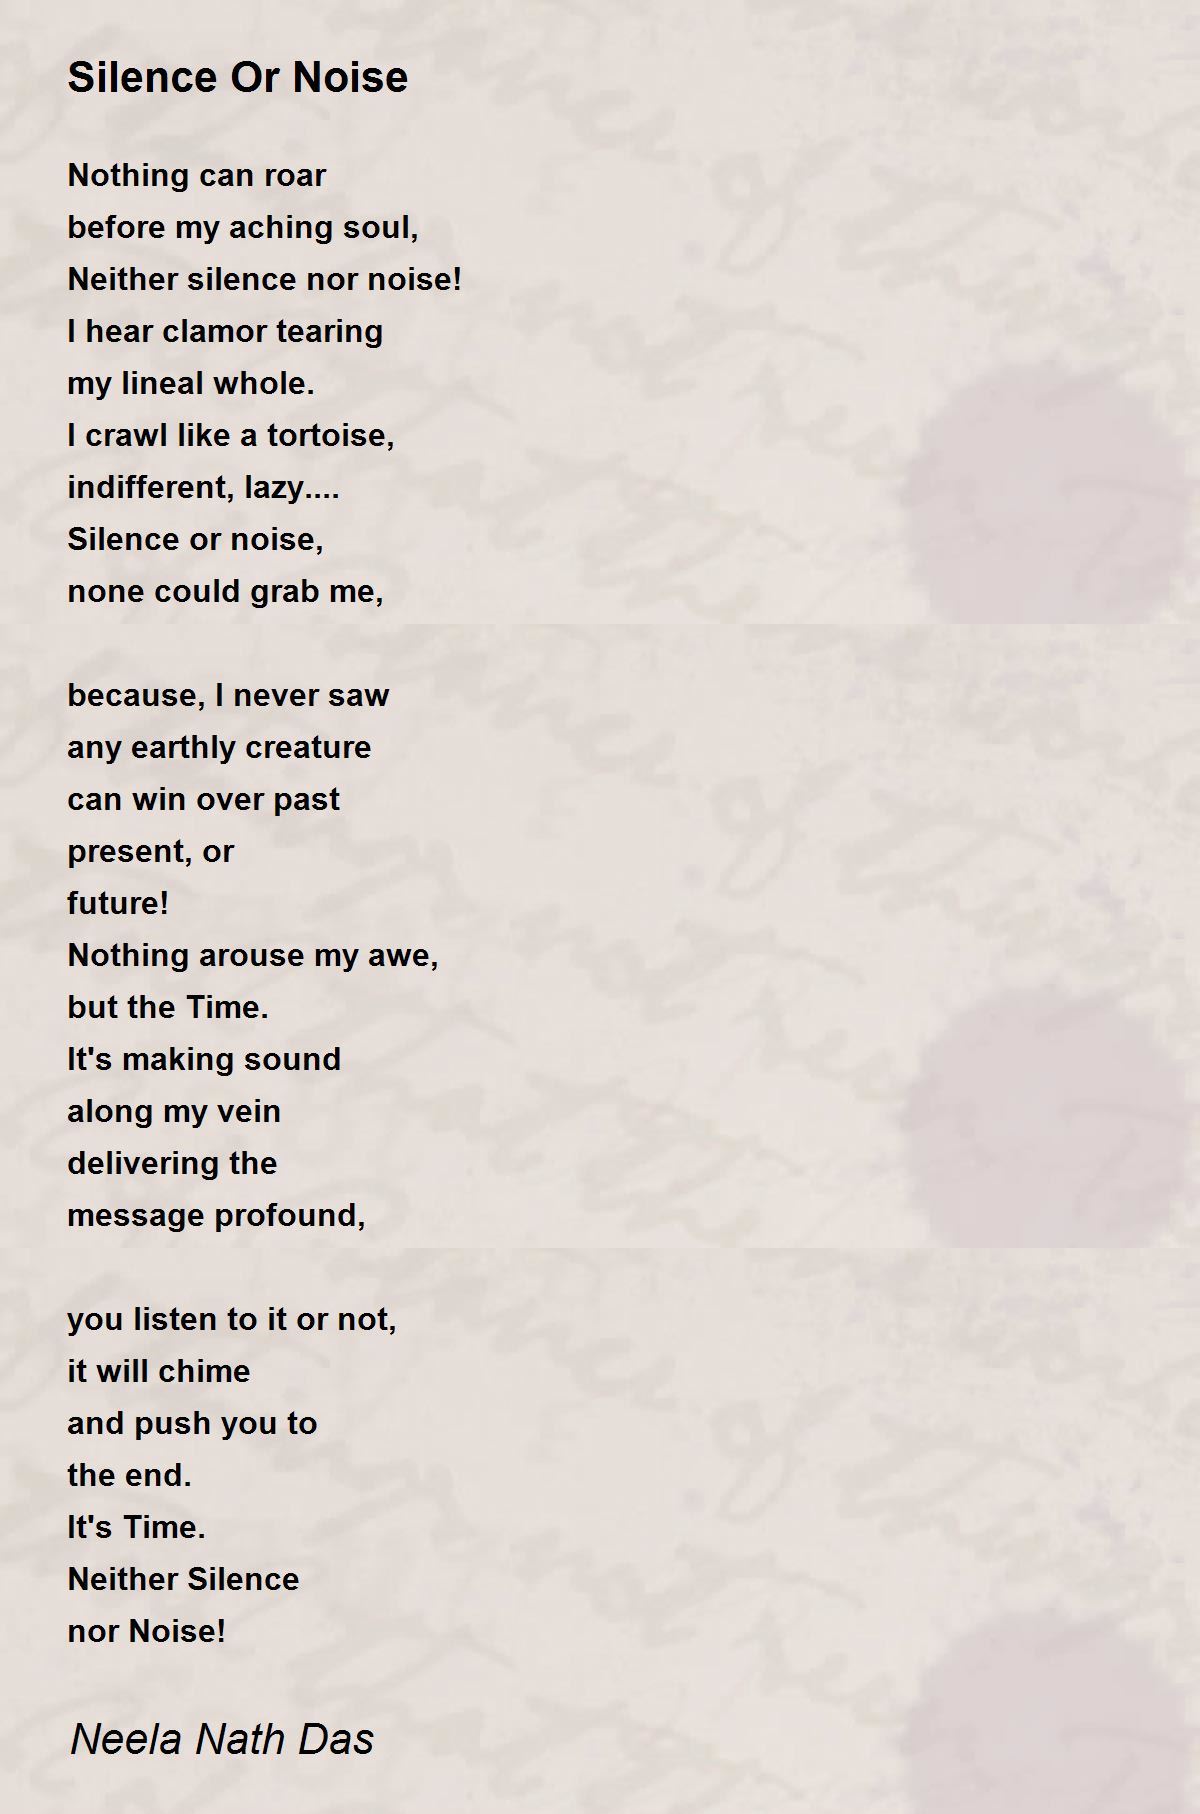 https://img.poemhunter.com/i/poem_images/751/silence-or-noise.jpg